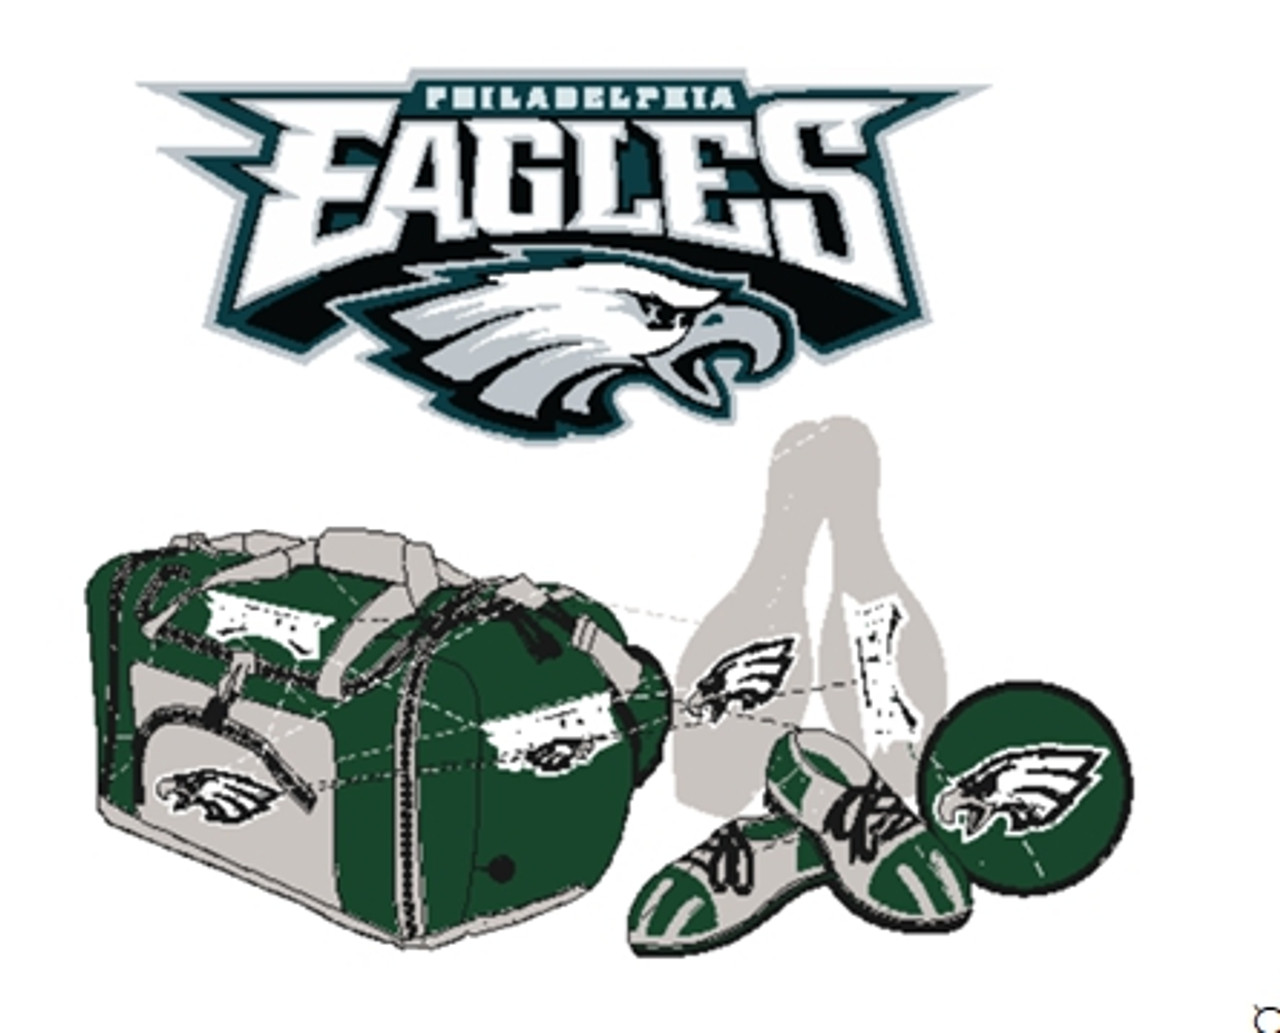 Philadelphia Eagles Bowling Gear Design